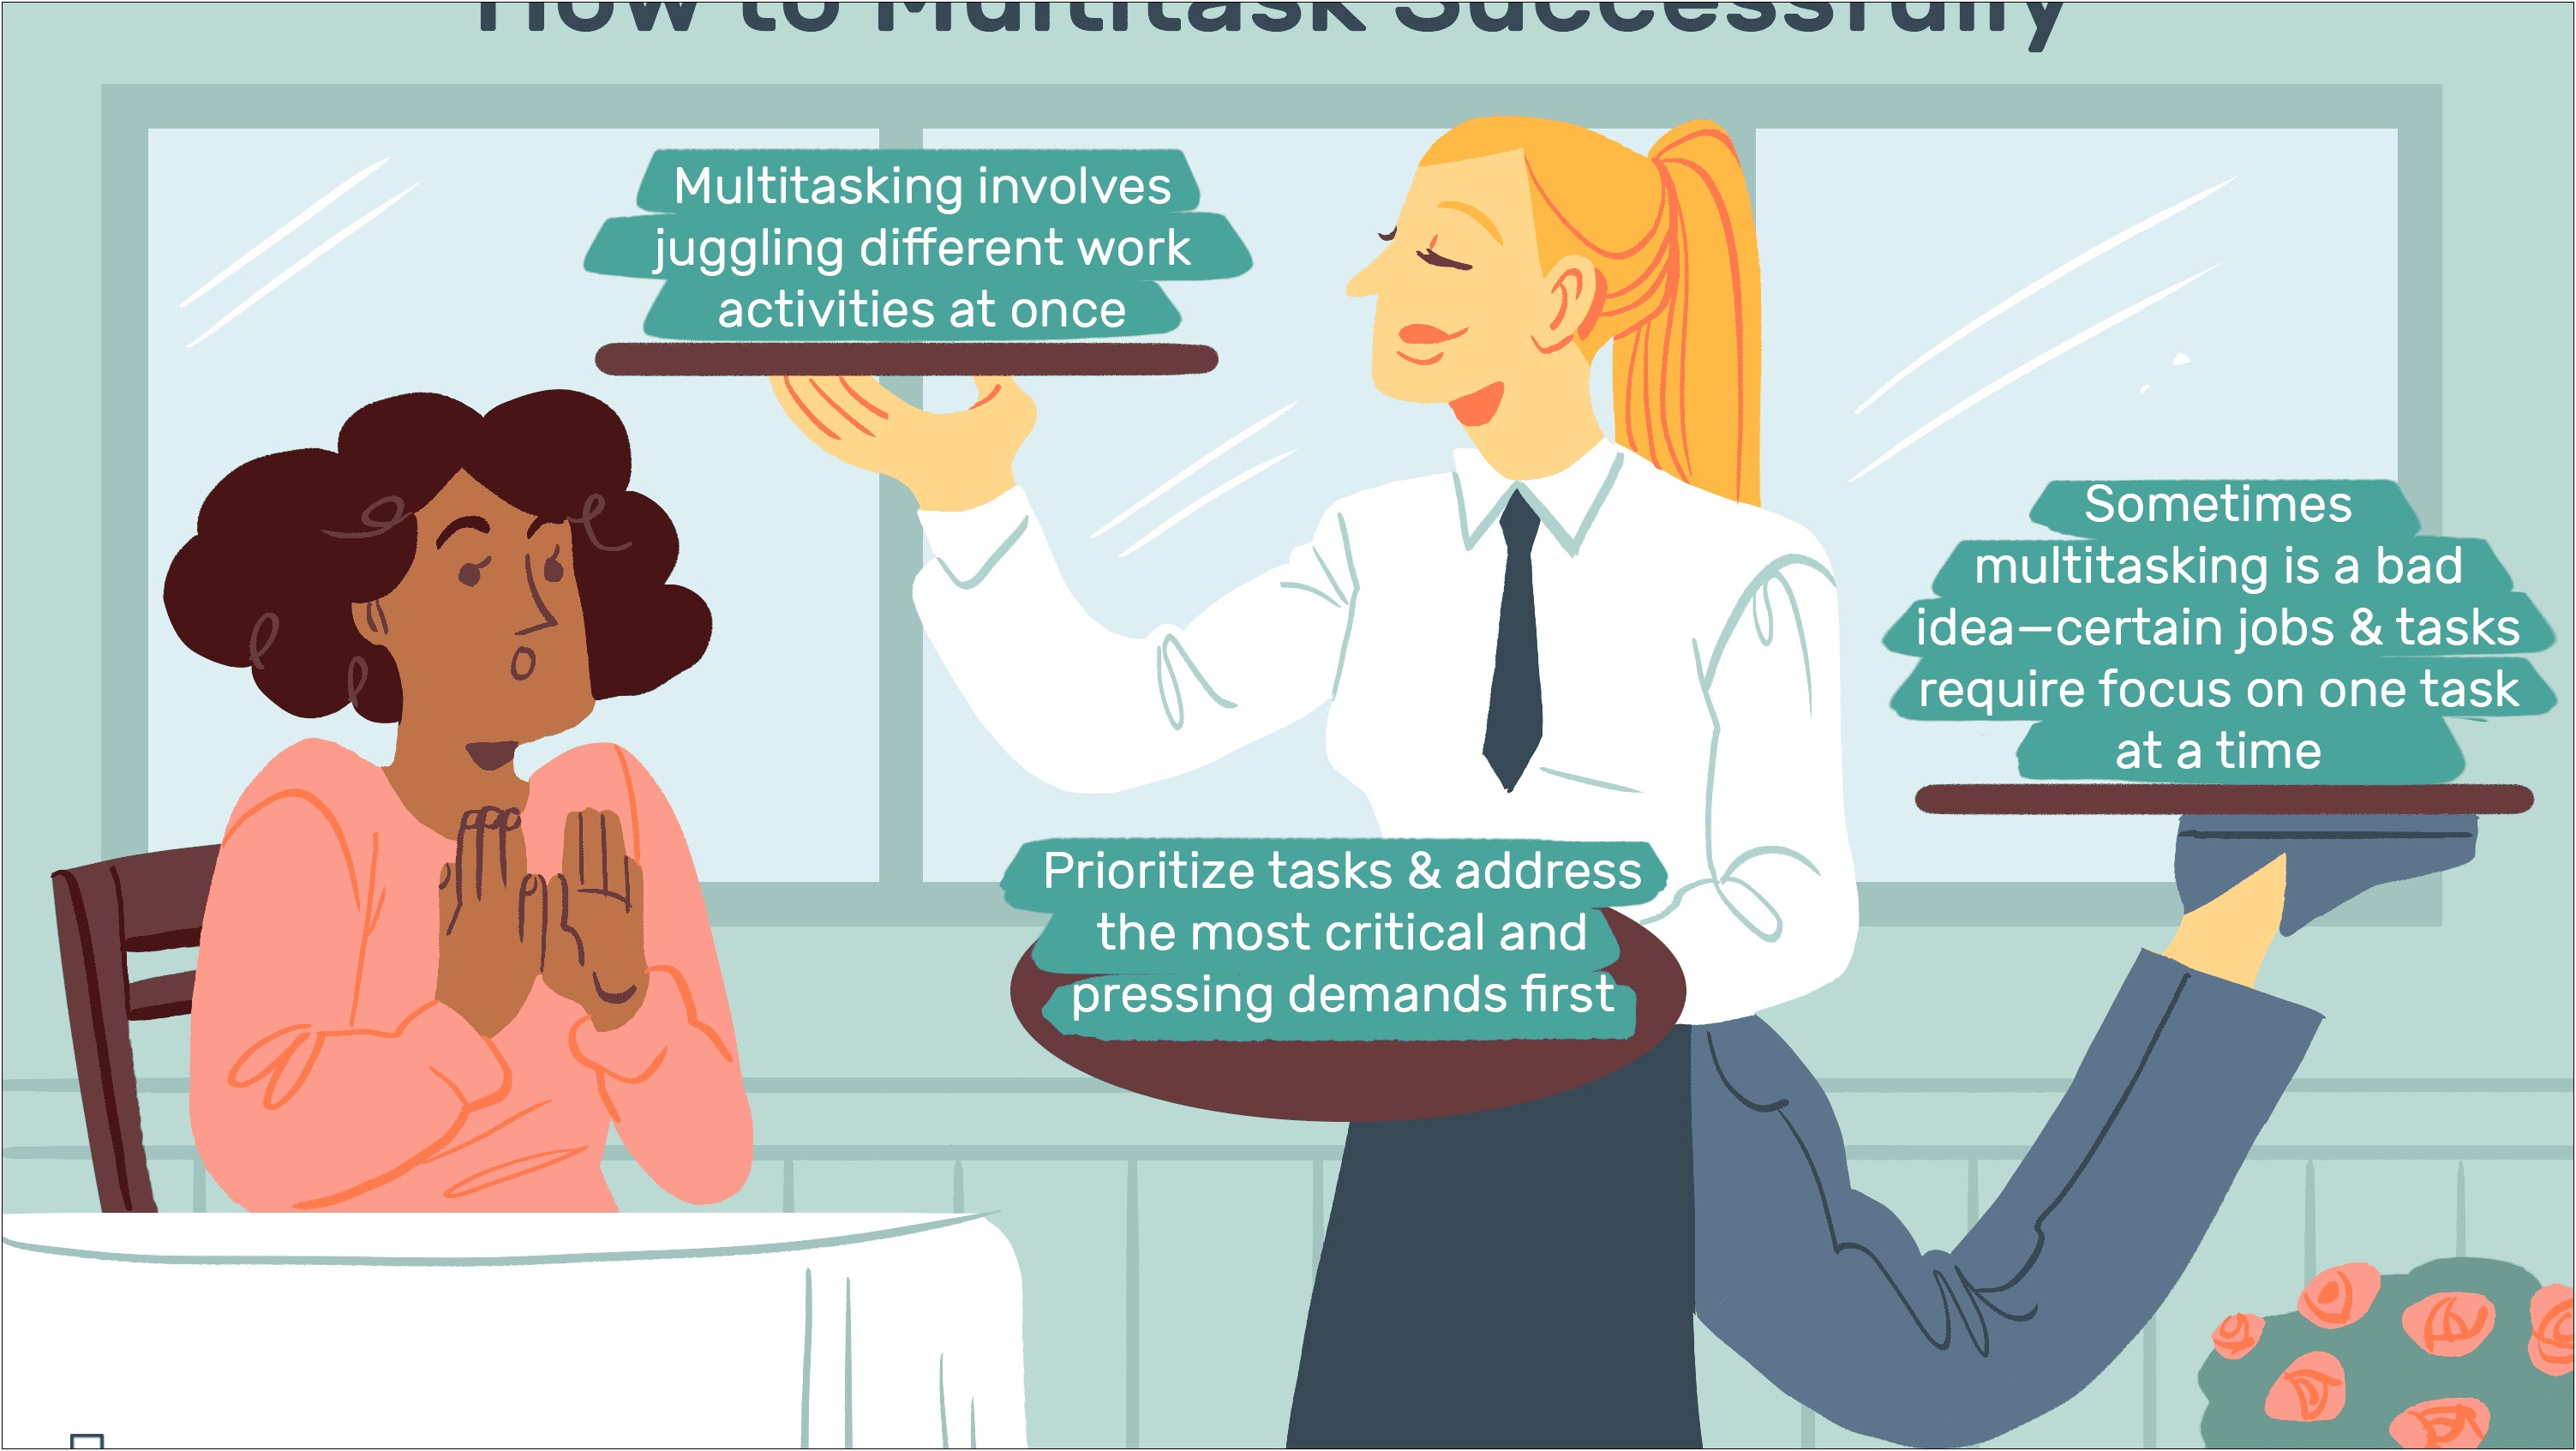 Short Professional Resume Summary Examples Of Multitasking